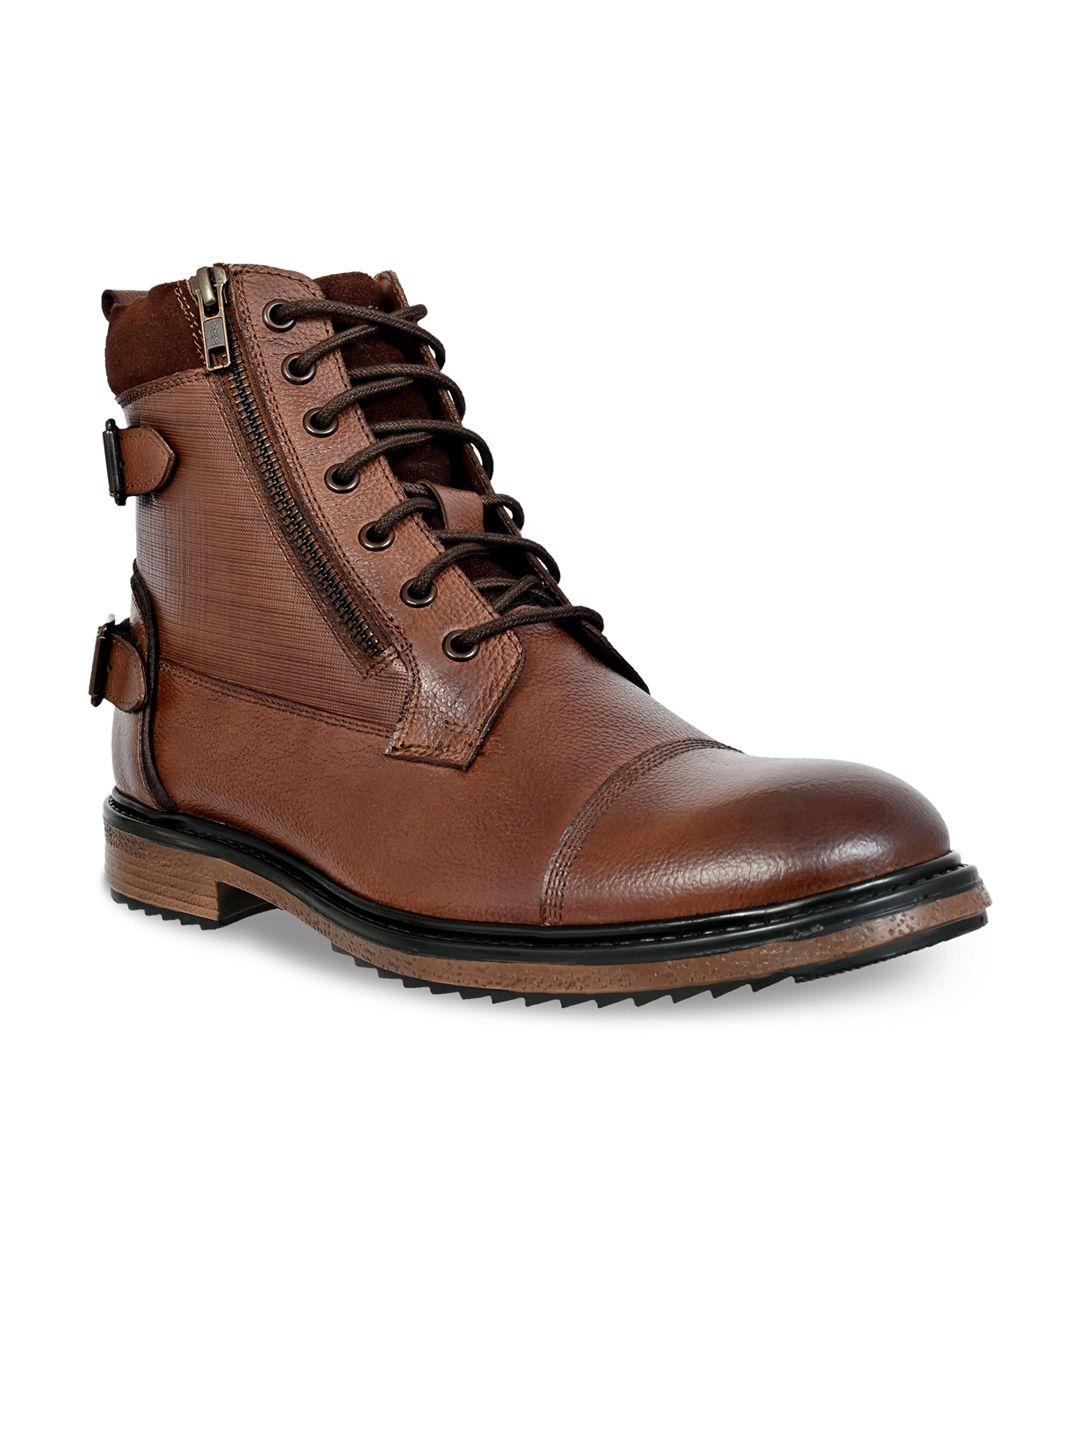 kicksfire block-heeled leather boots